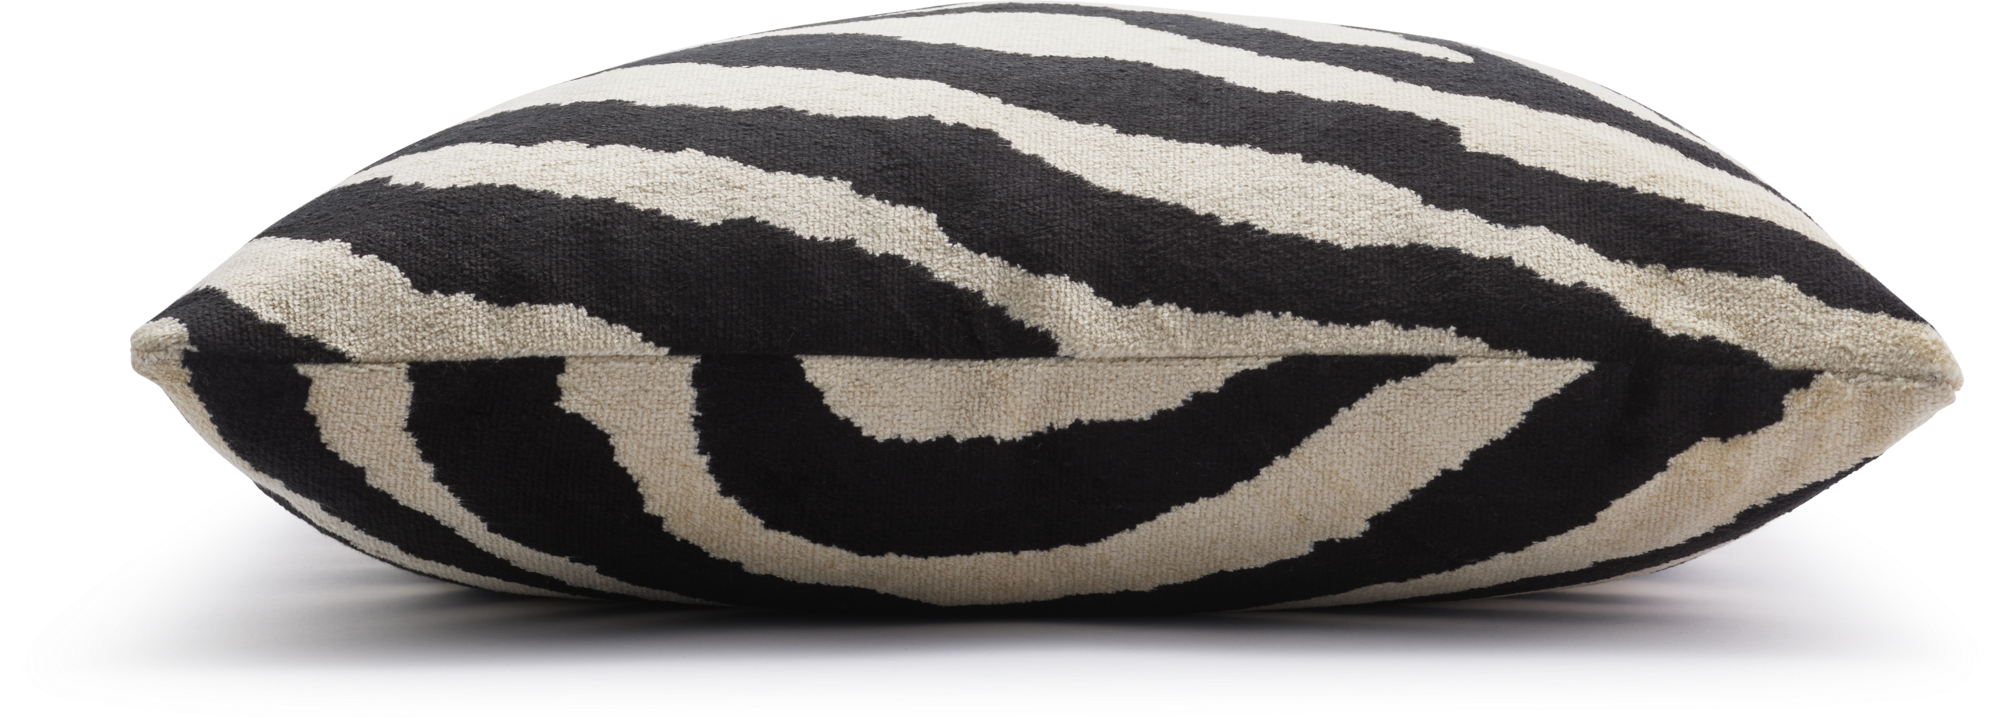 Arty Zebra Decorative pillow